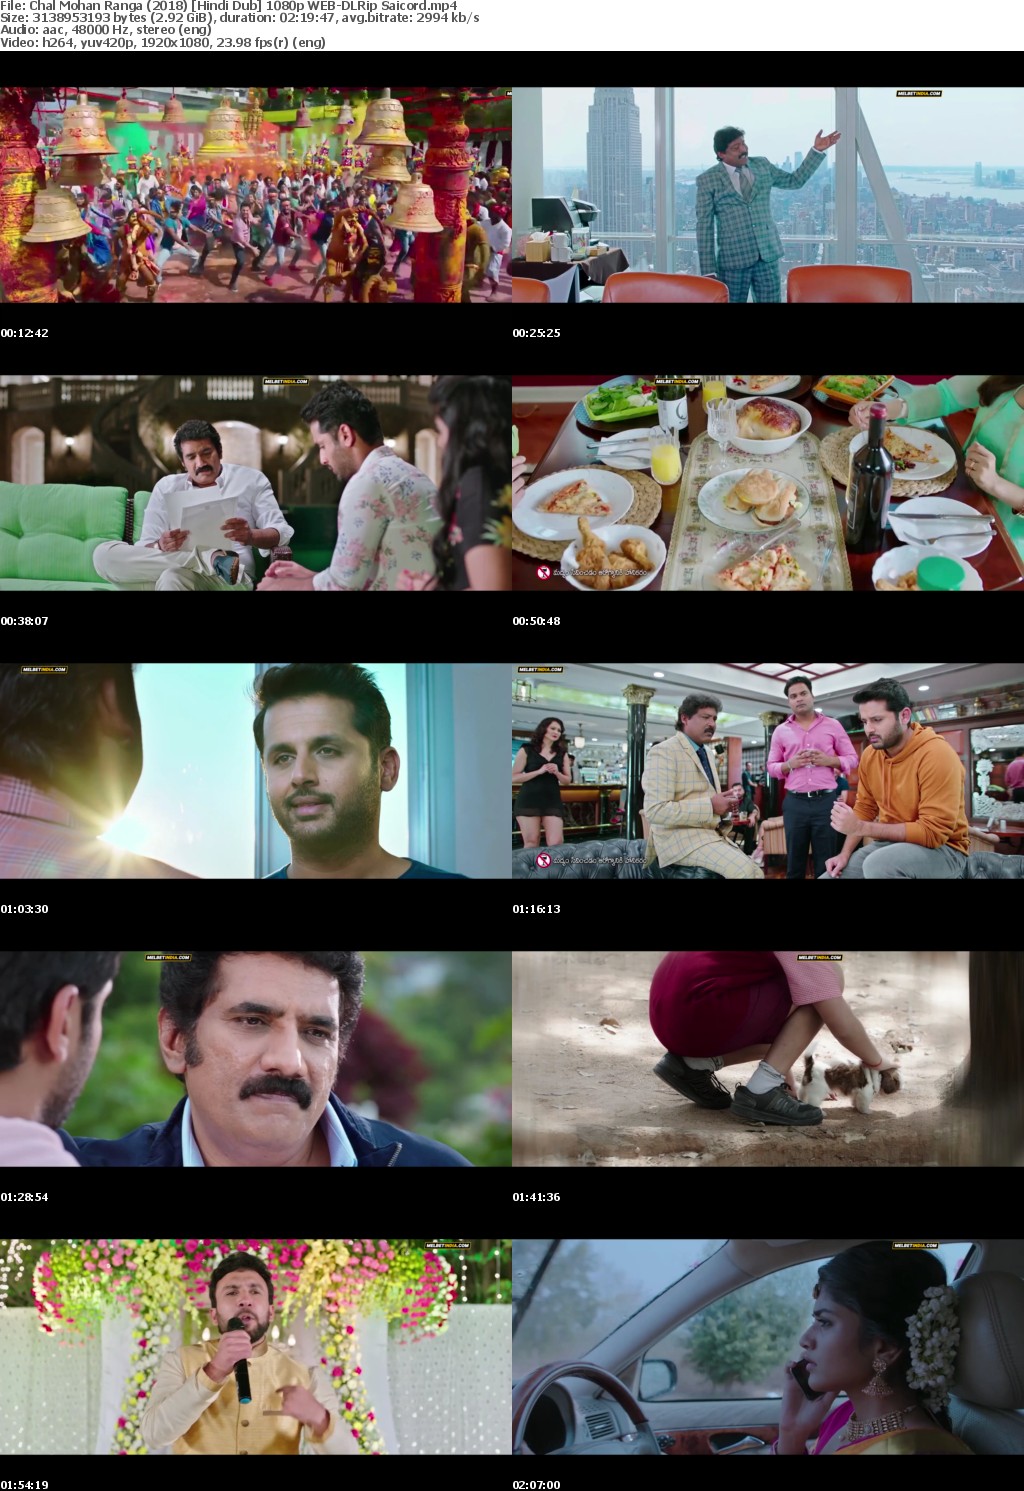 Chal Mohan Ranga (2018) Hindi Dub 1080p WEB-DLRip Saicord